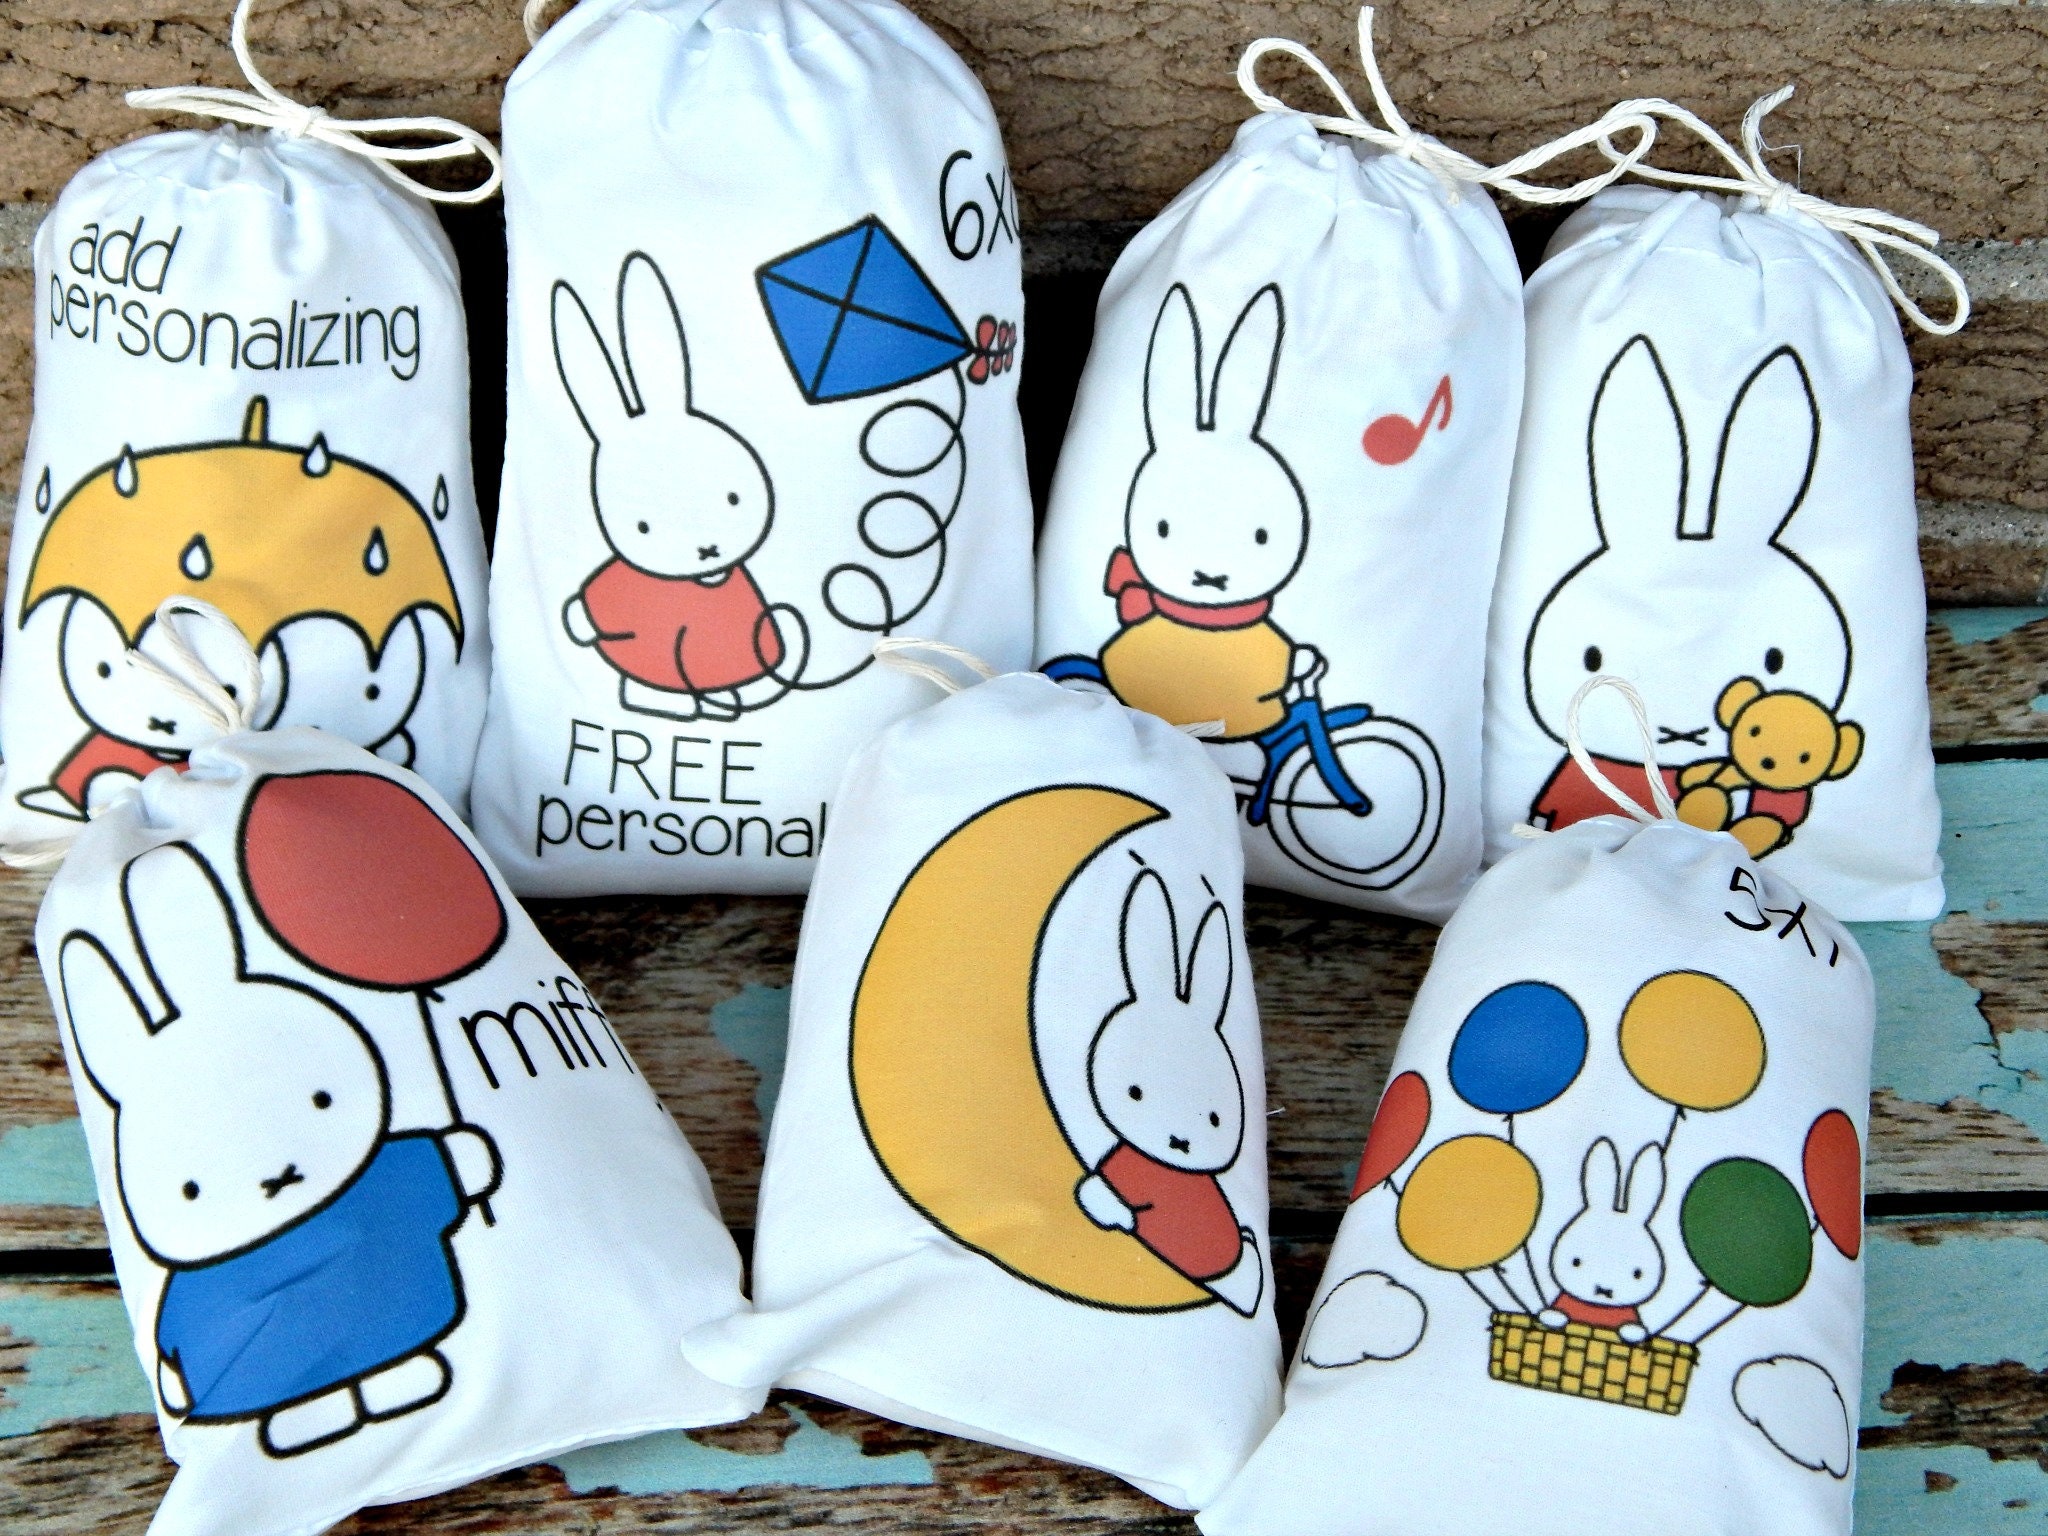 Miffy Rabbit Theme Mini Messenger Bag